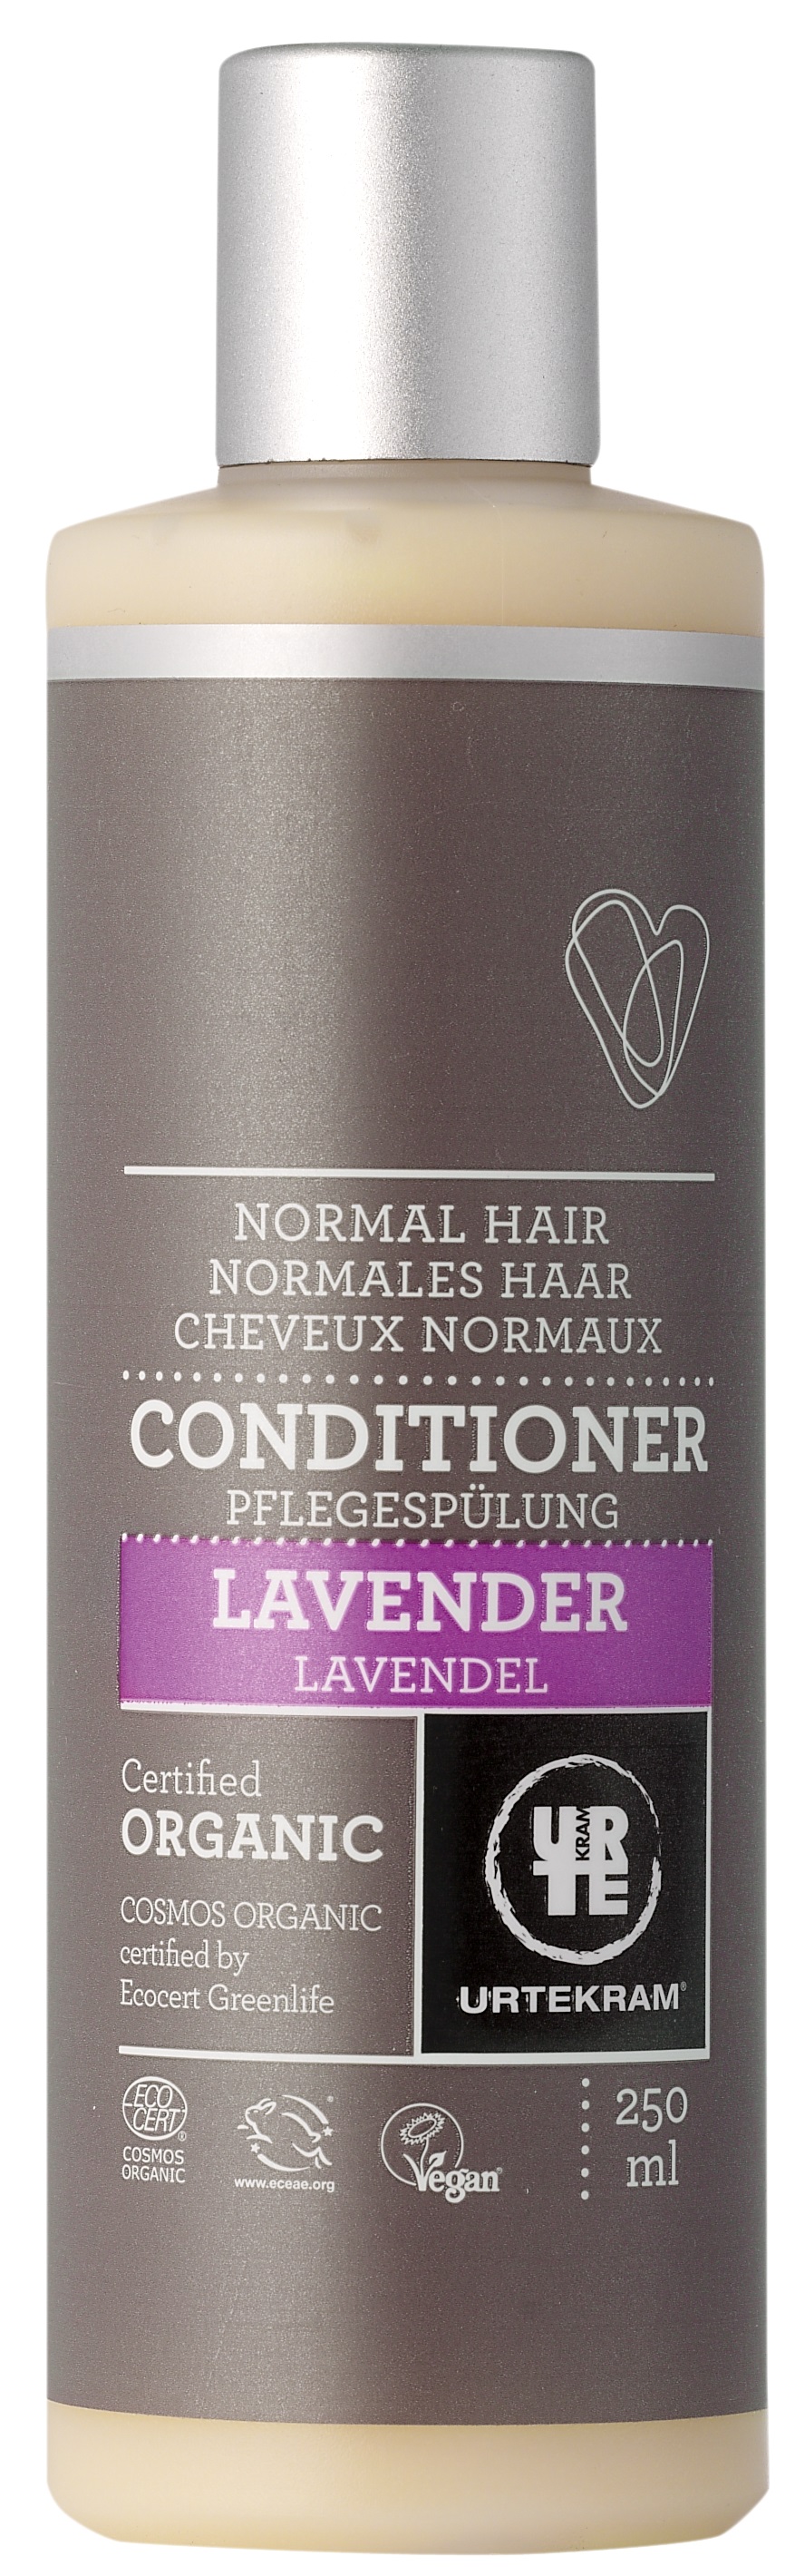 Urtekram Lavender Conditioner 250ml